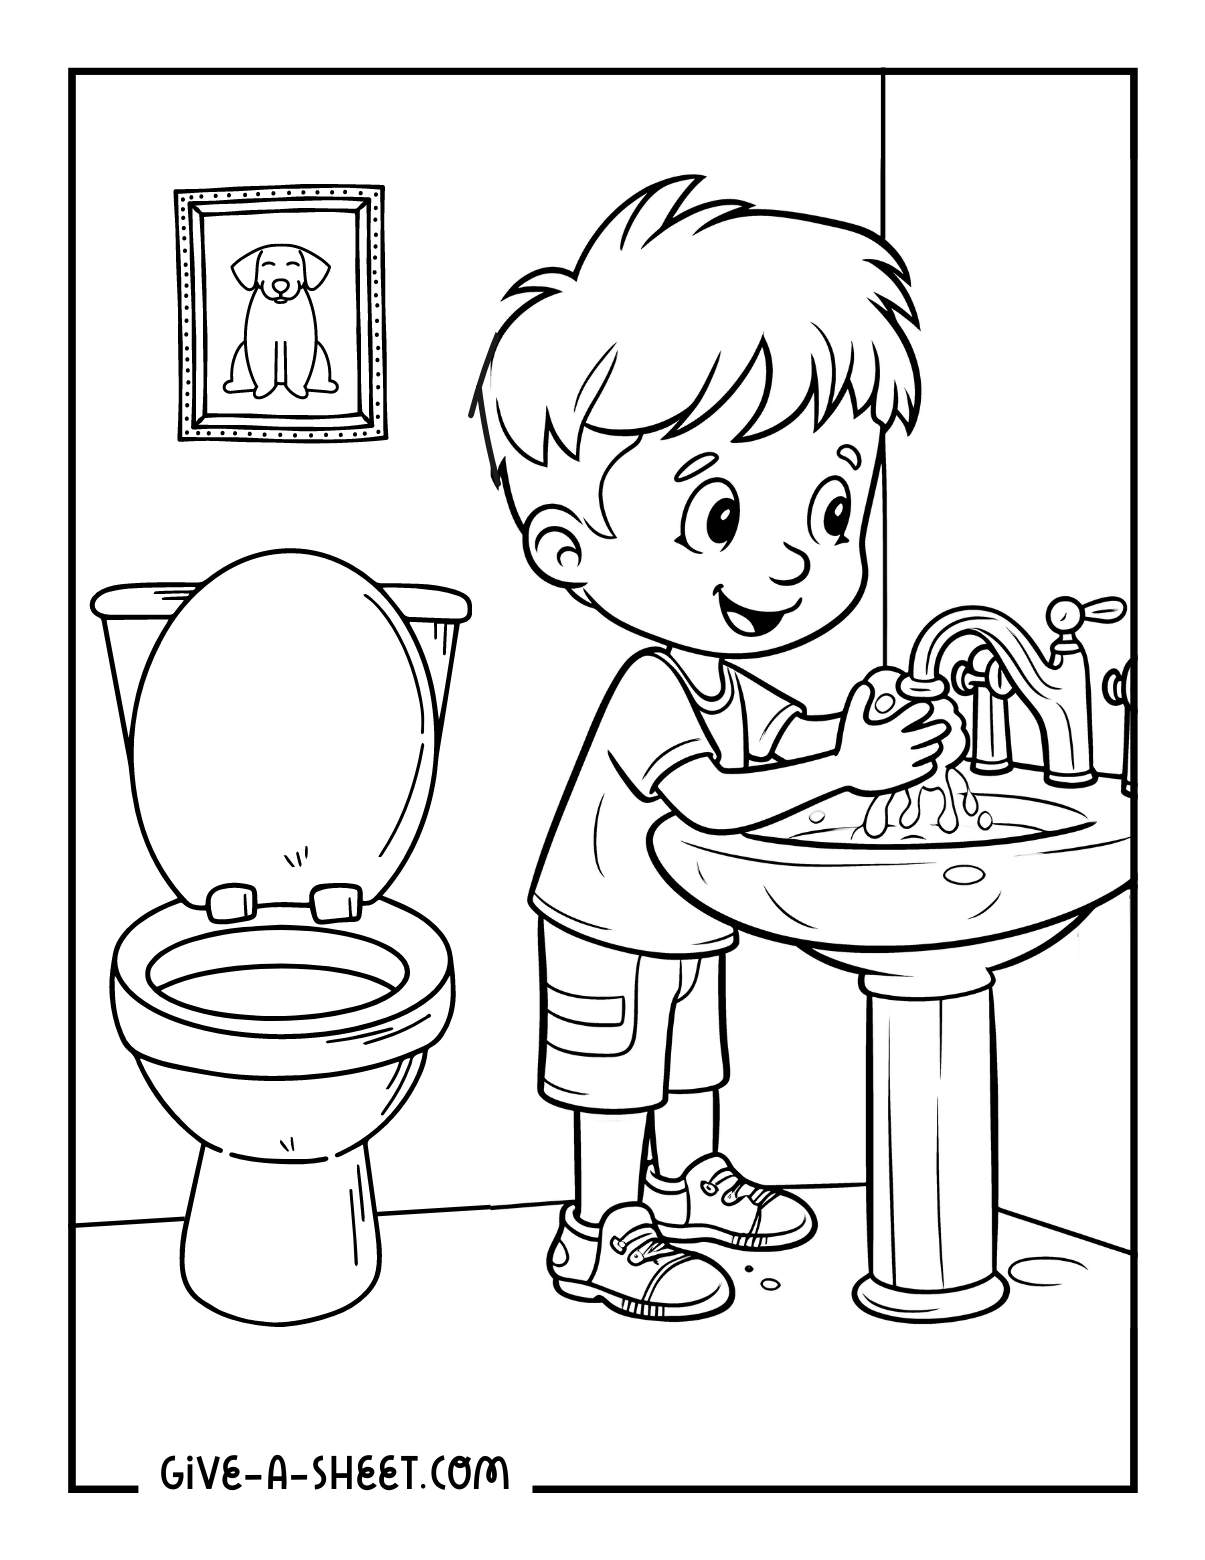 Educational activity hand washing toilet coloring sheet.